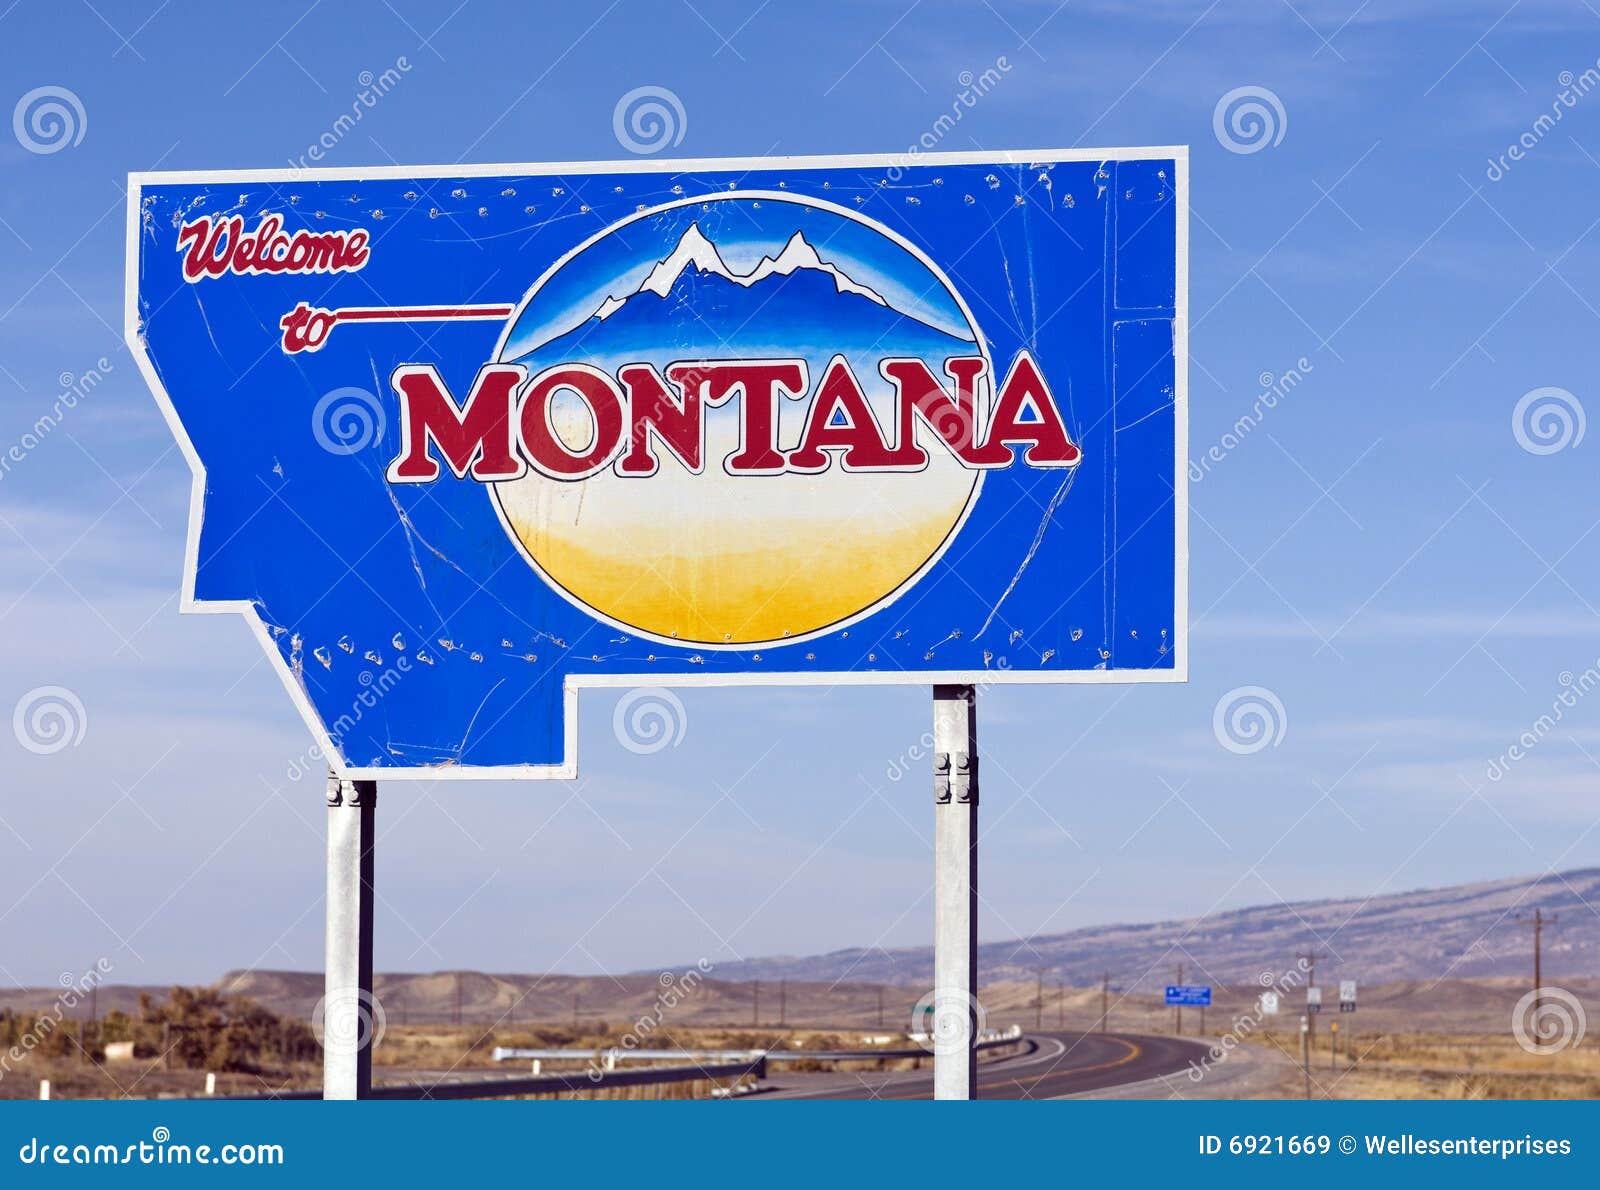 welcome to montana